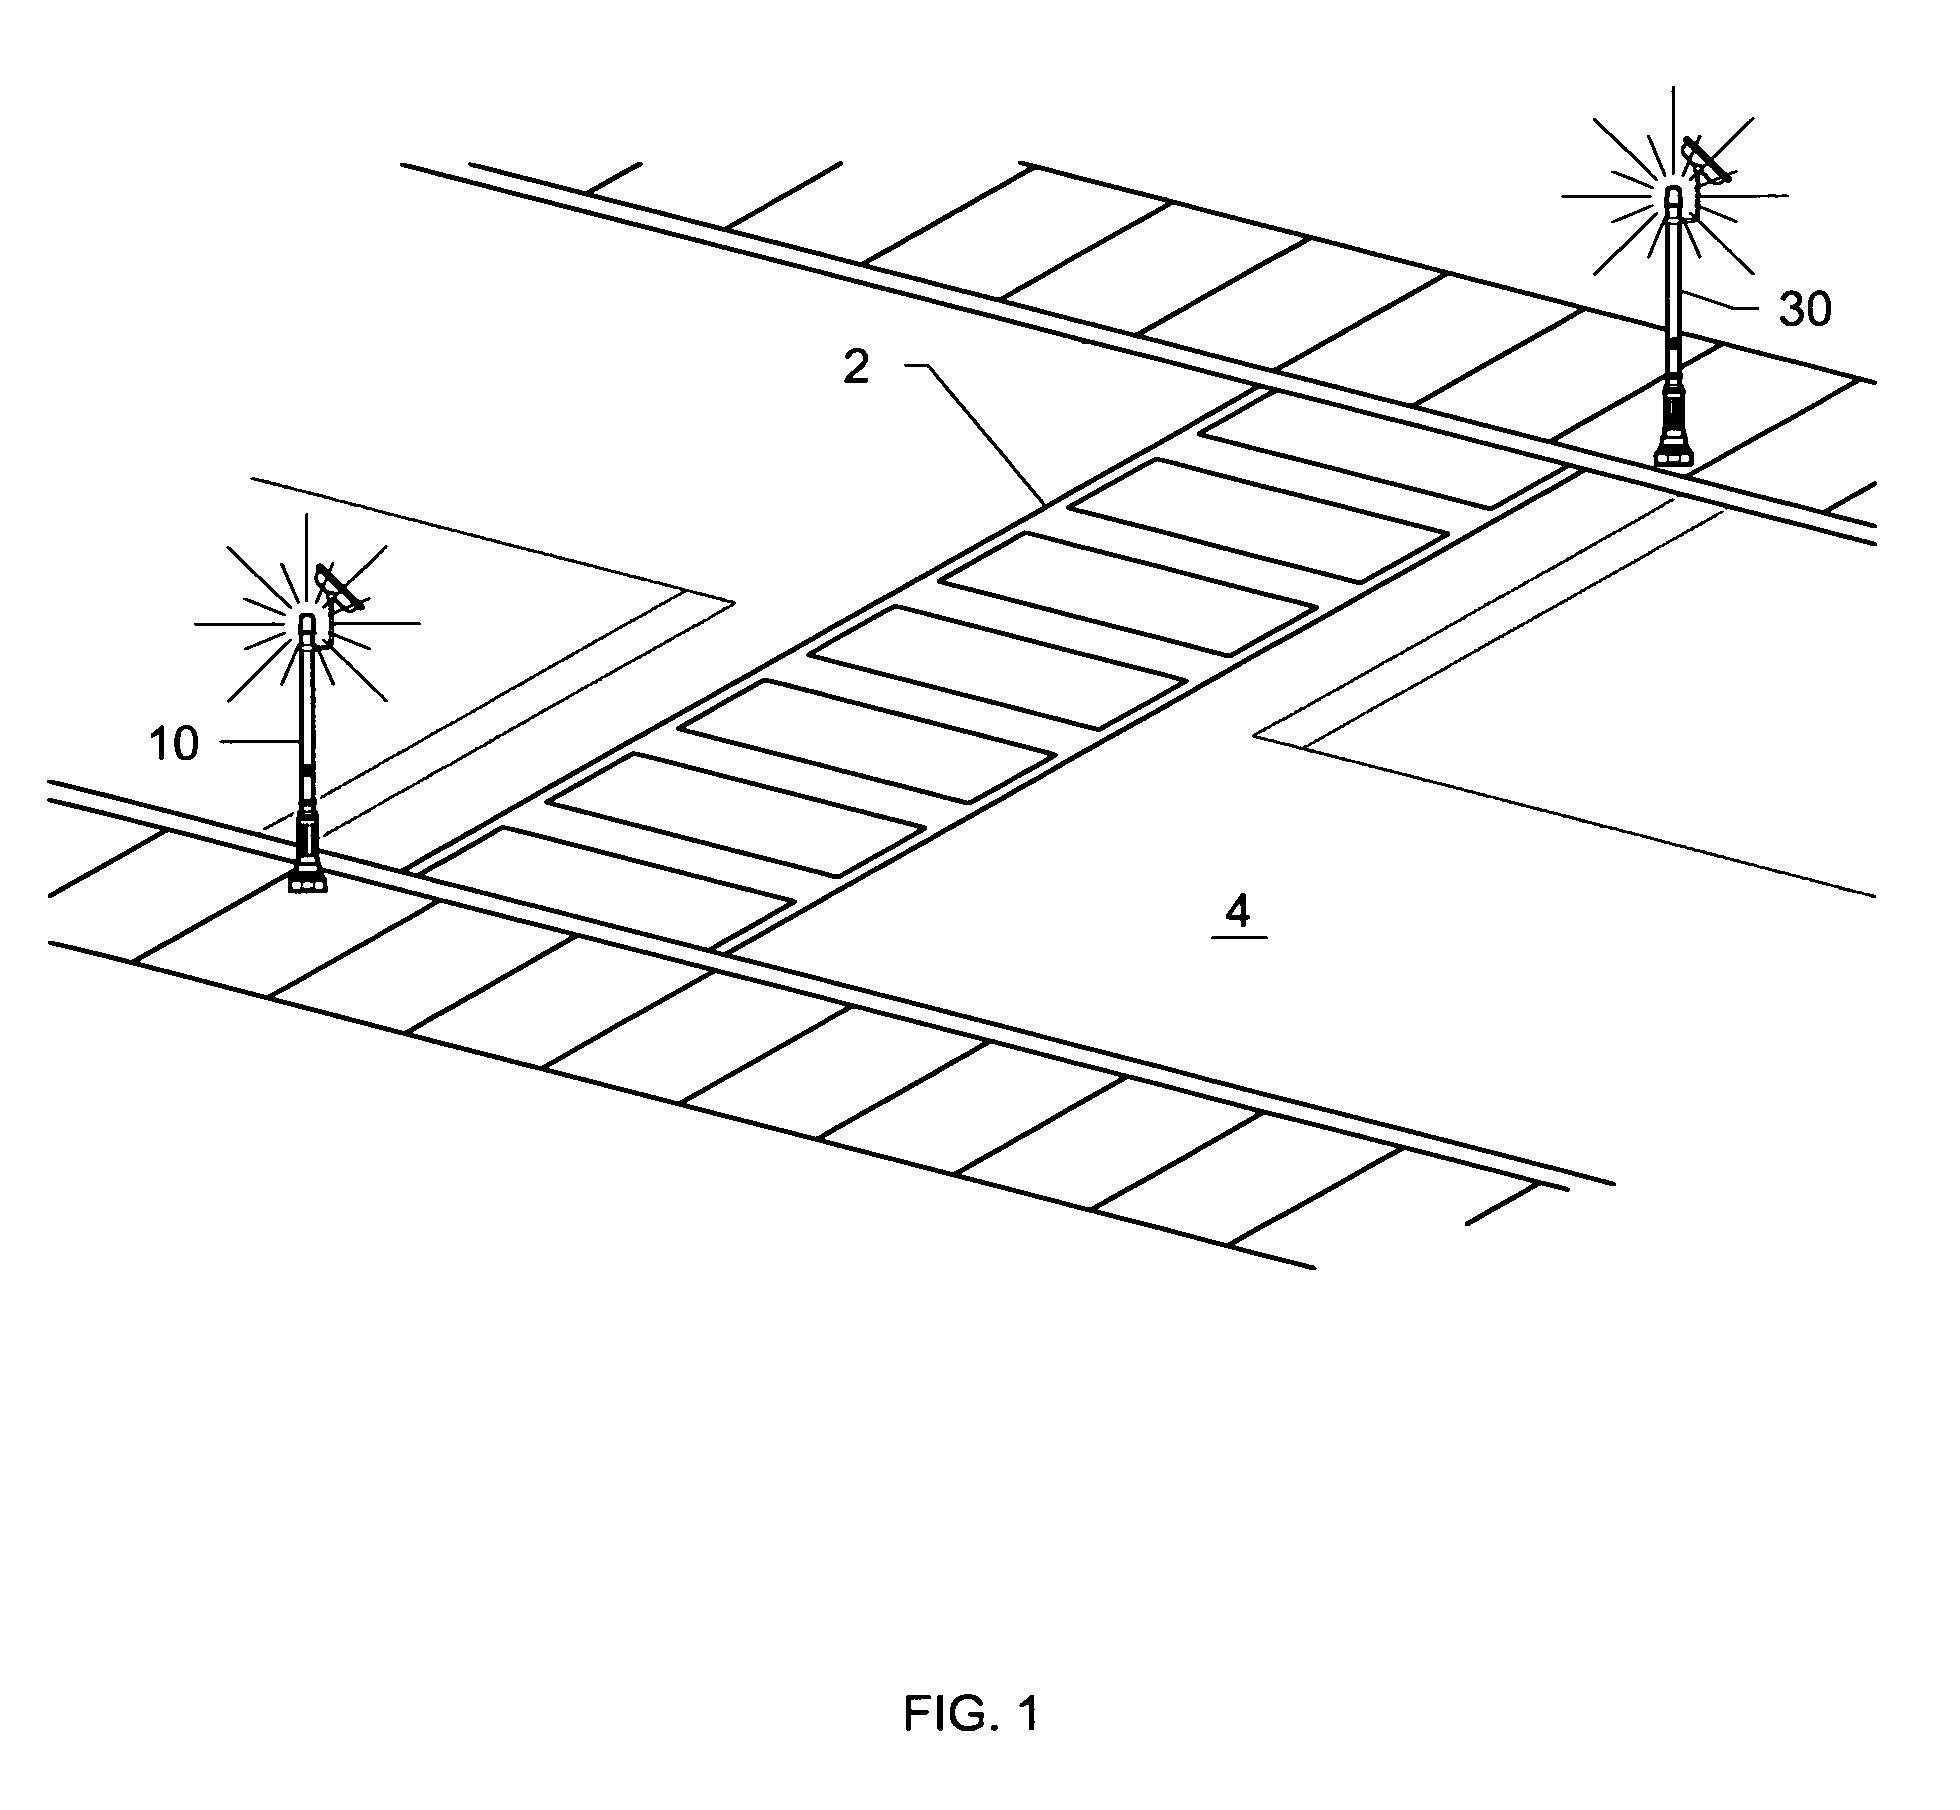 Pedestrian crossing signal system